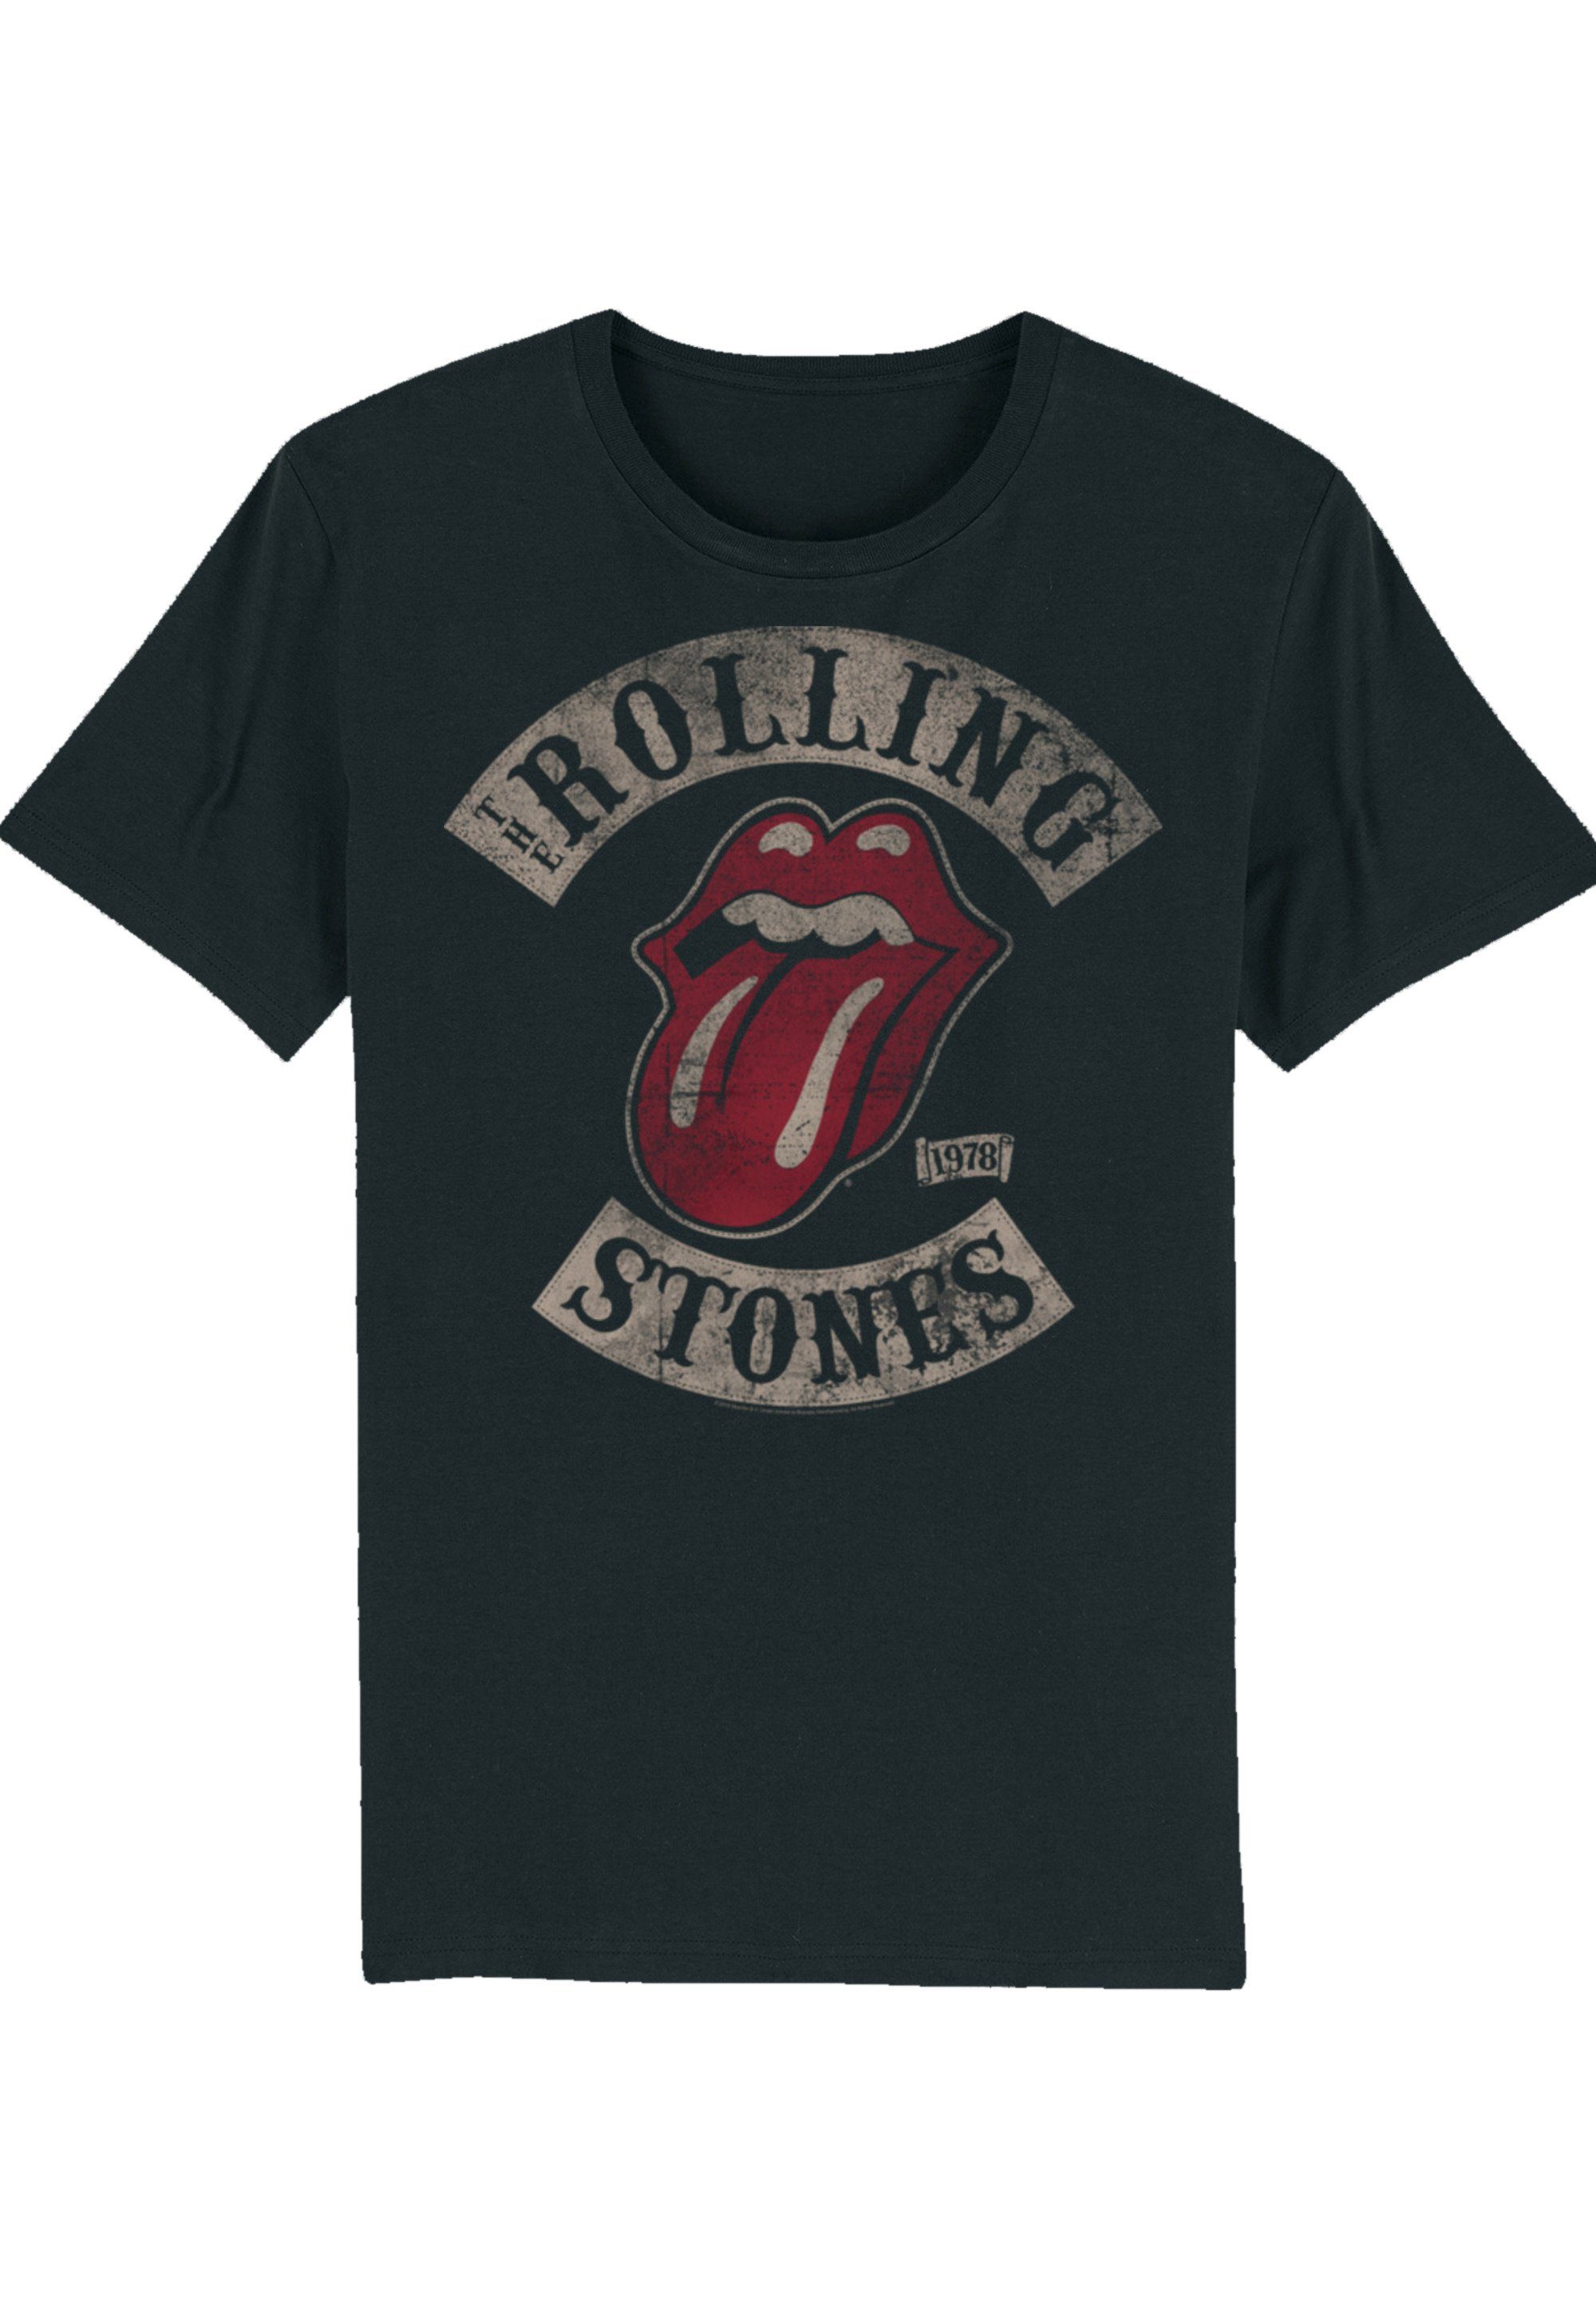 F4NT4STIC T-Shirt The Rolling Stones Tour '78 Print, Komfortabel und  vielseitig kombinierbar